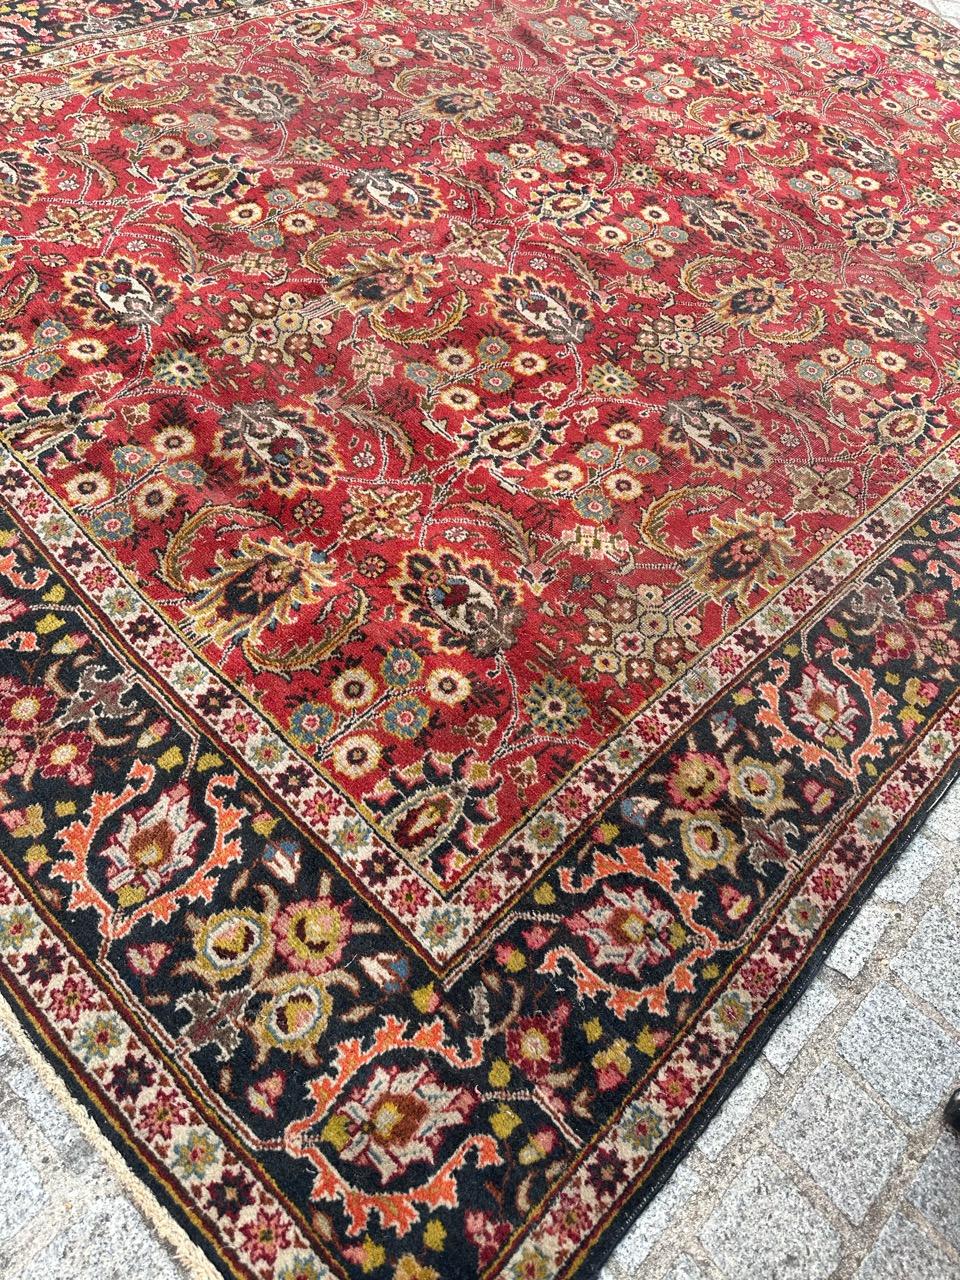 Bobyrug’s Nice early 20th century tabriz rug For Sale 3